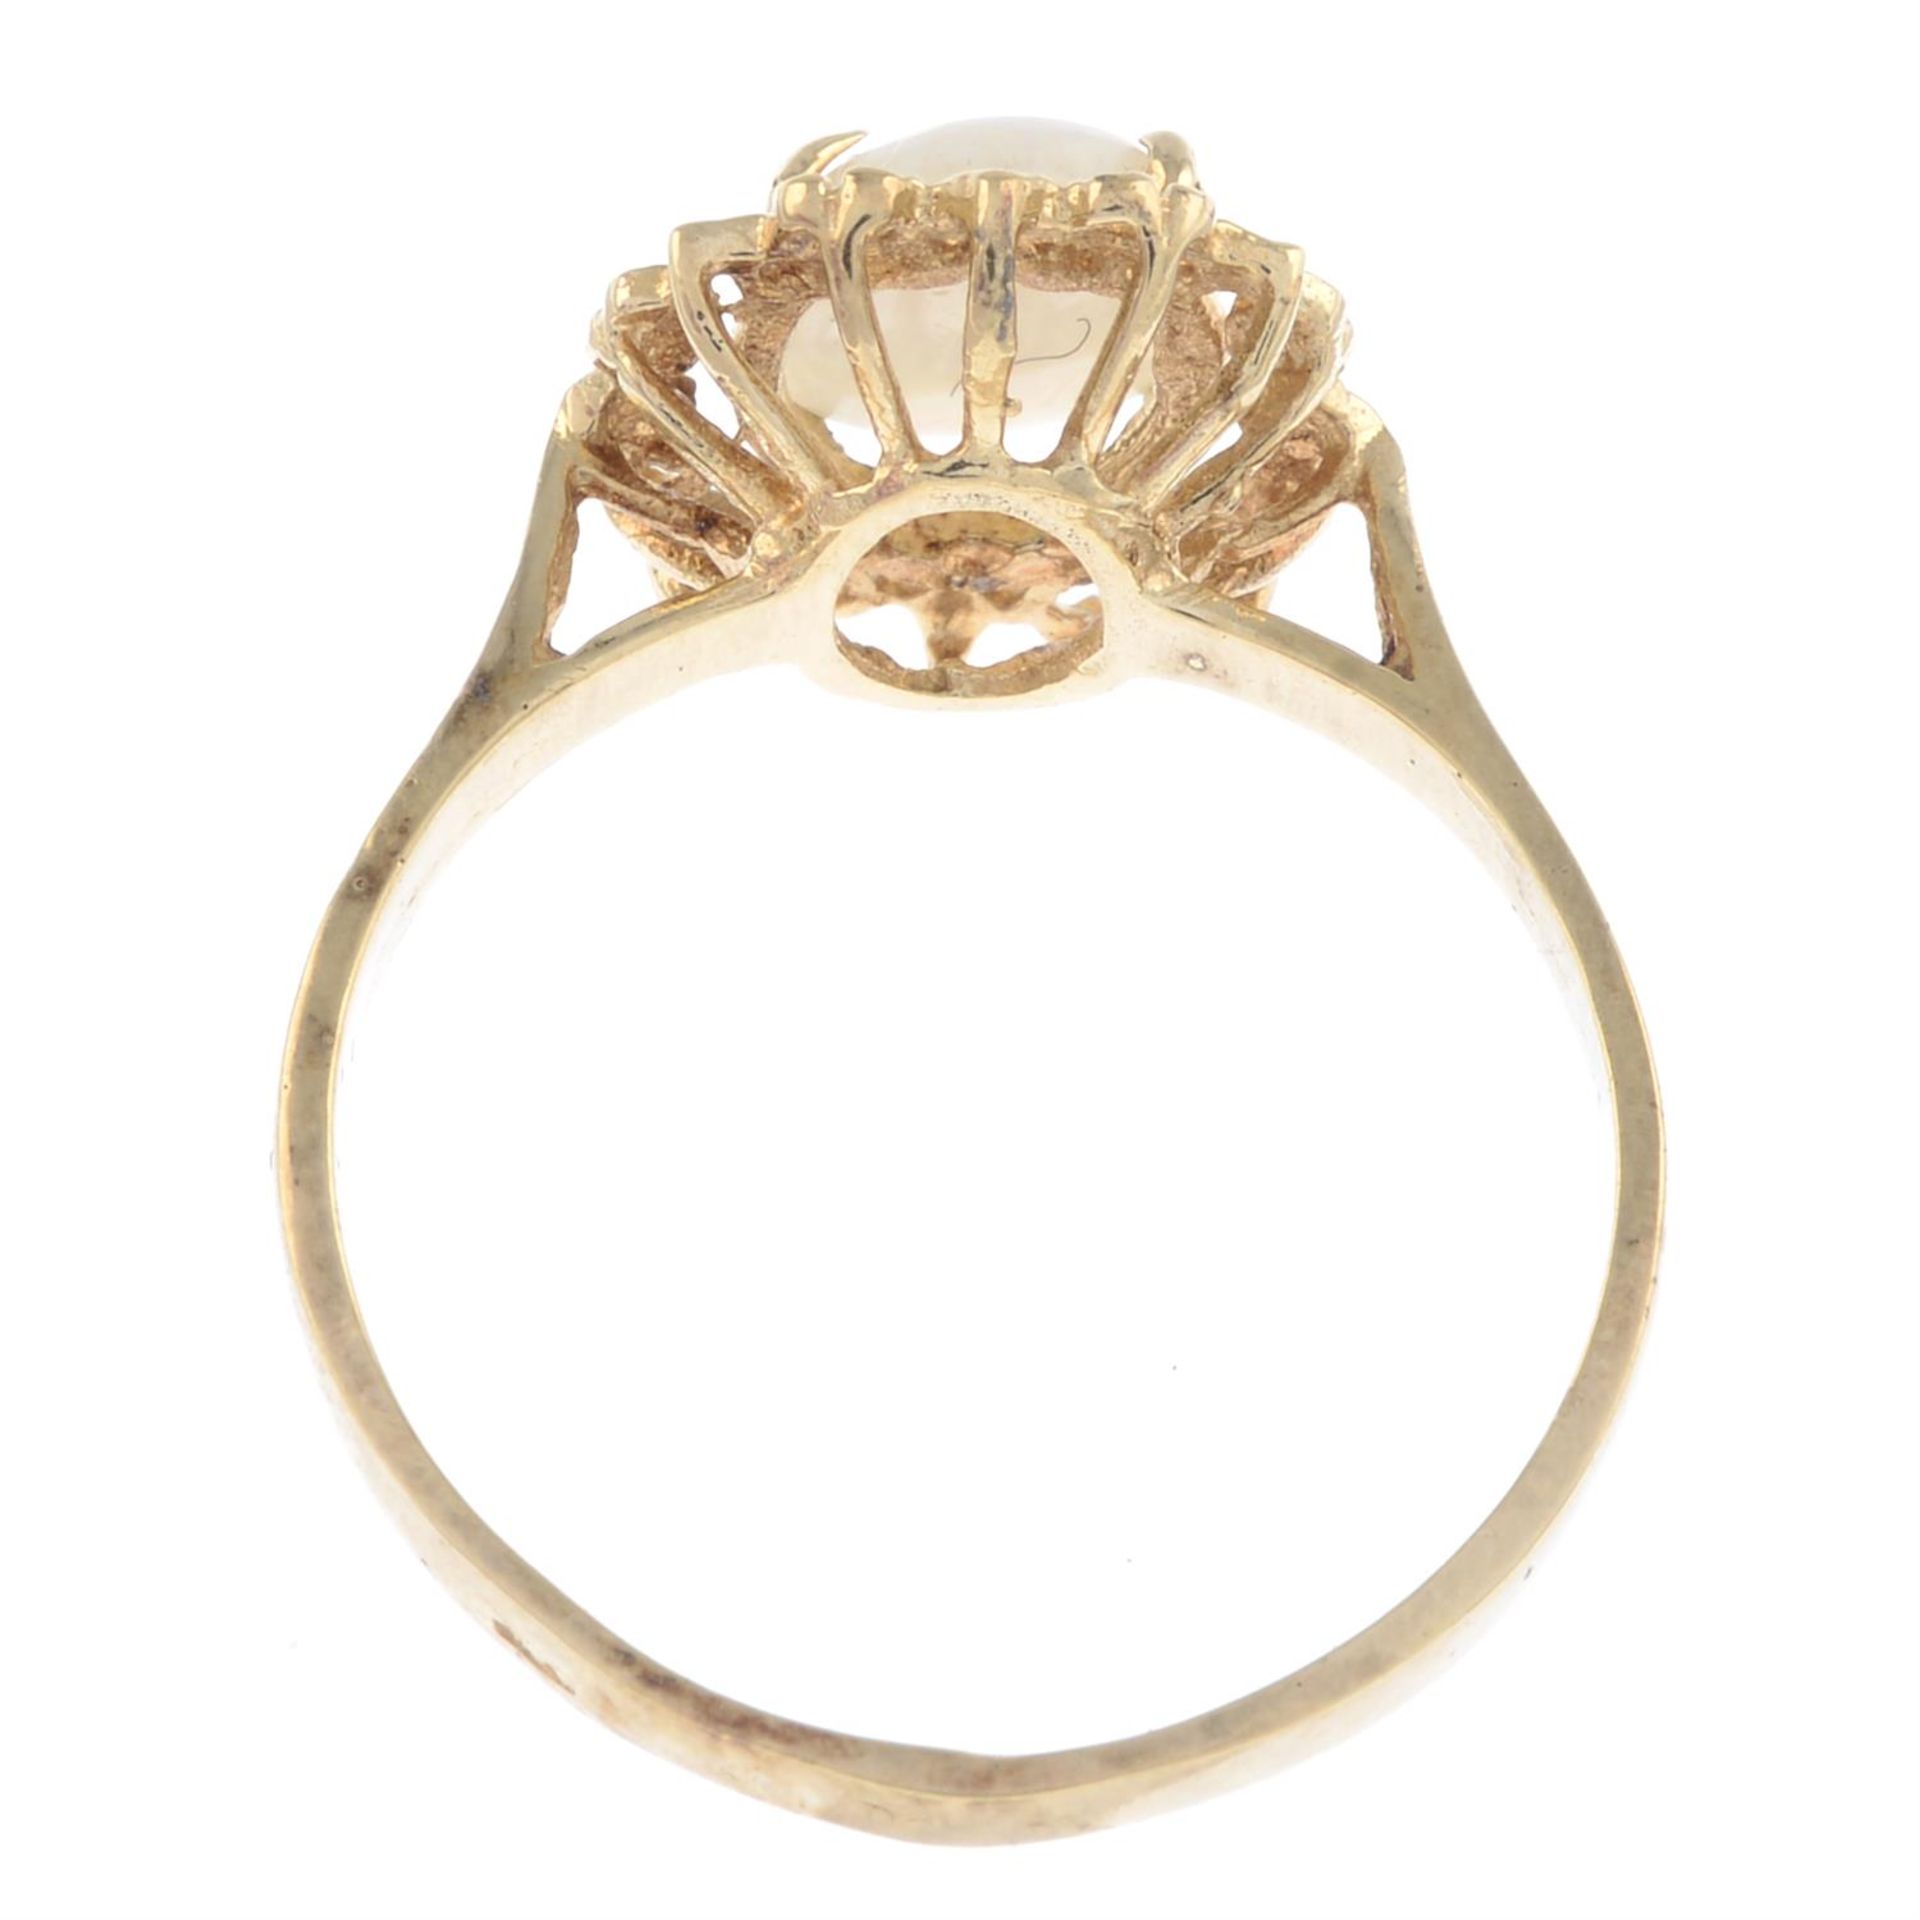 Opal dress ring - Image 2 of 2